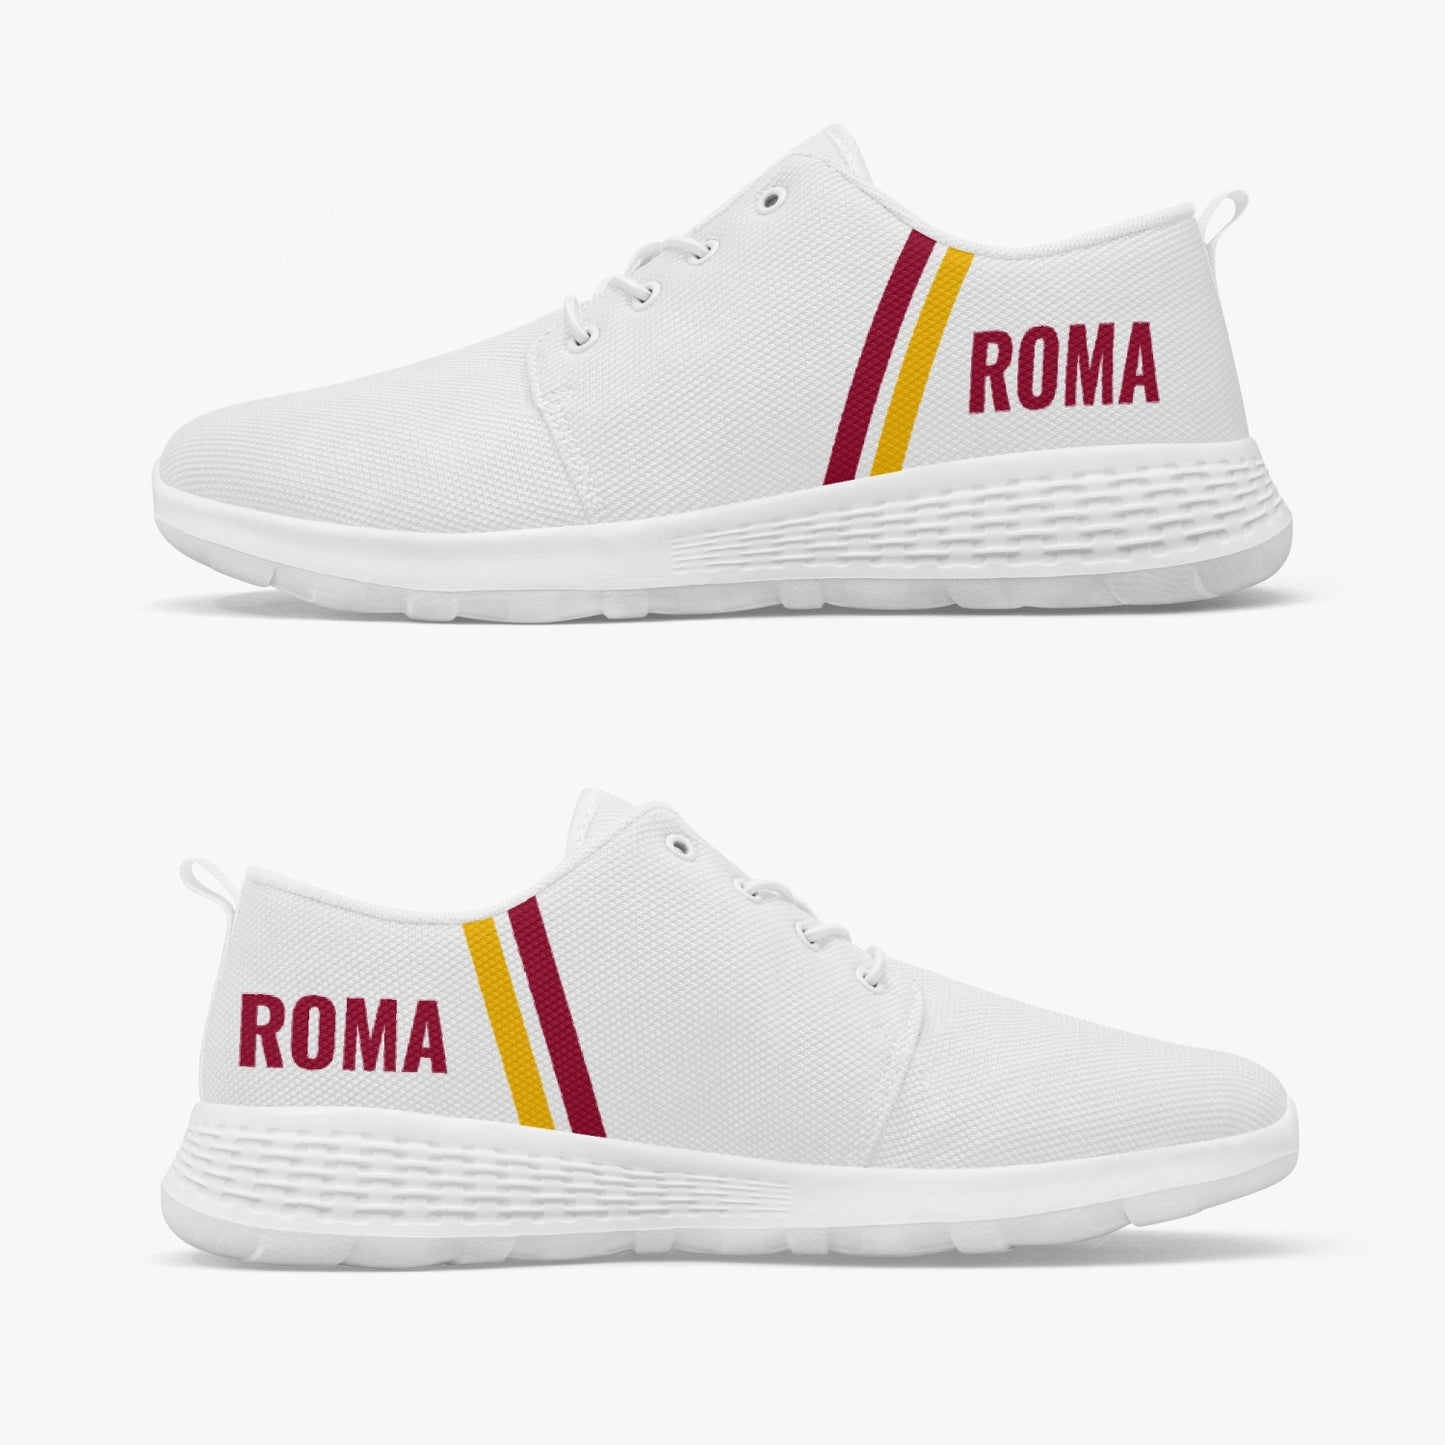 Roma Running Shoes - men's /women's sizes